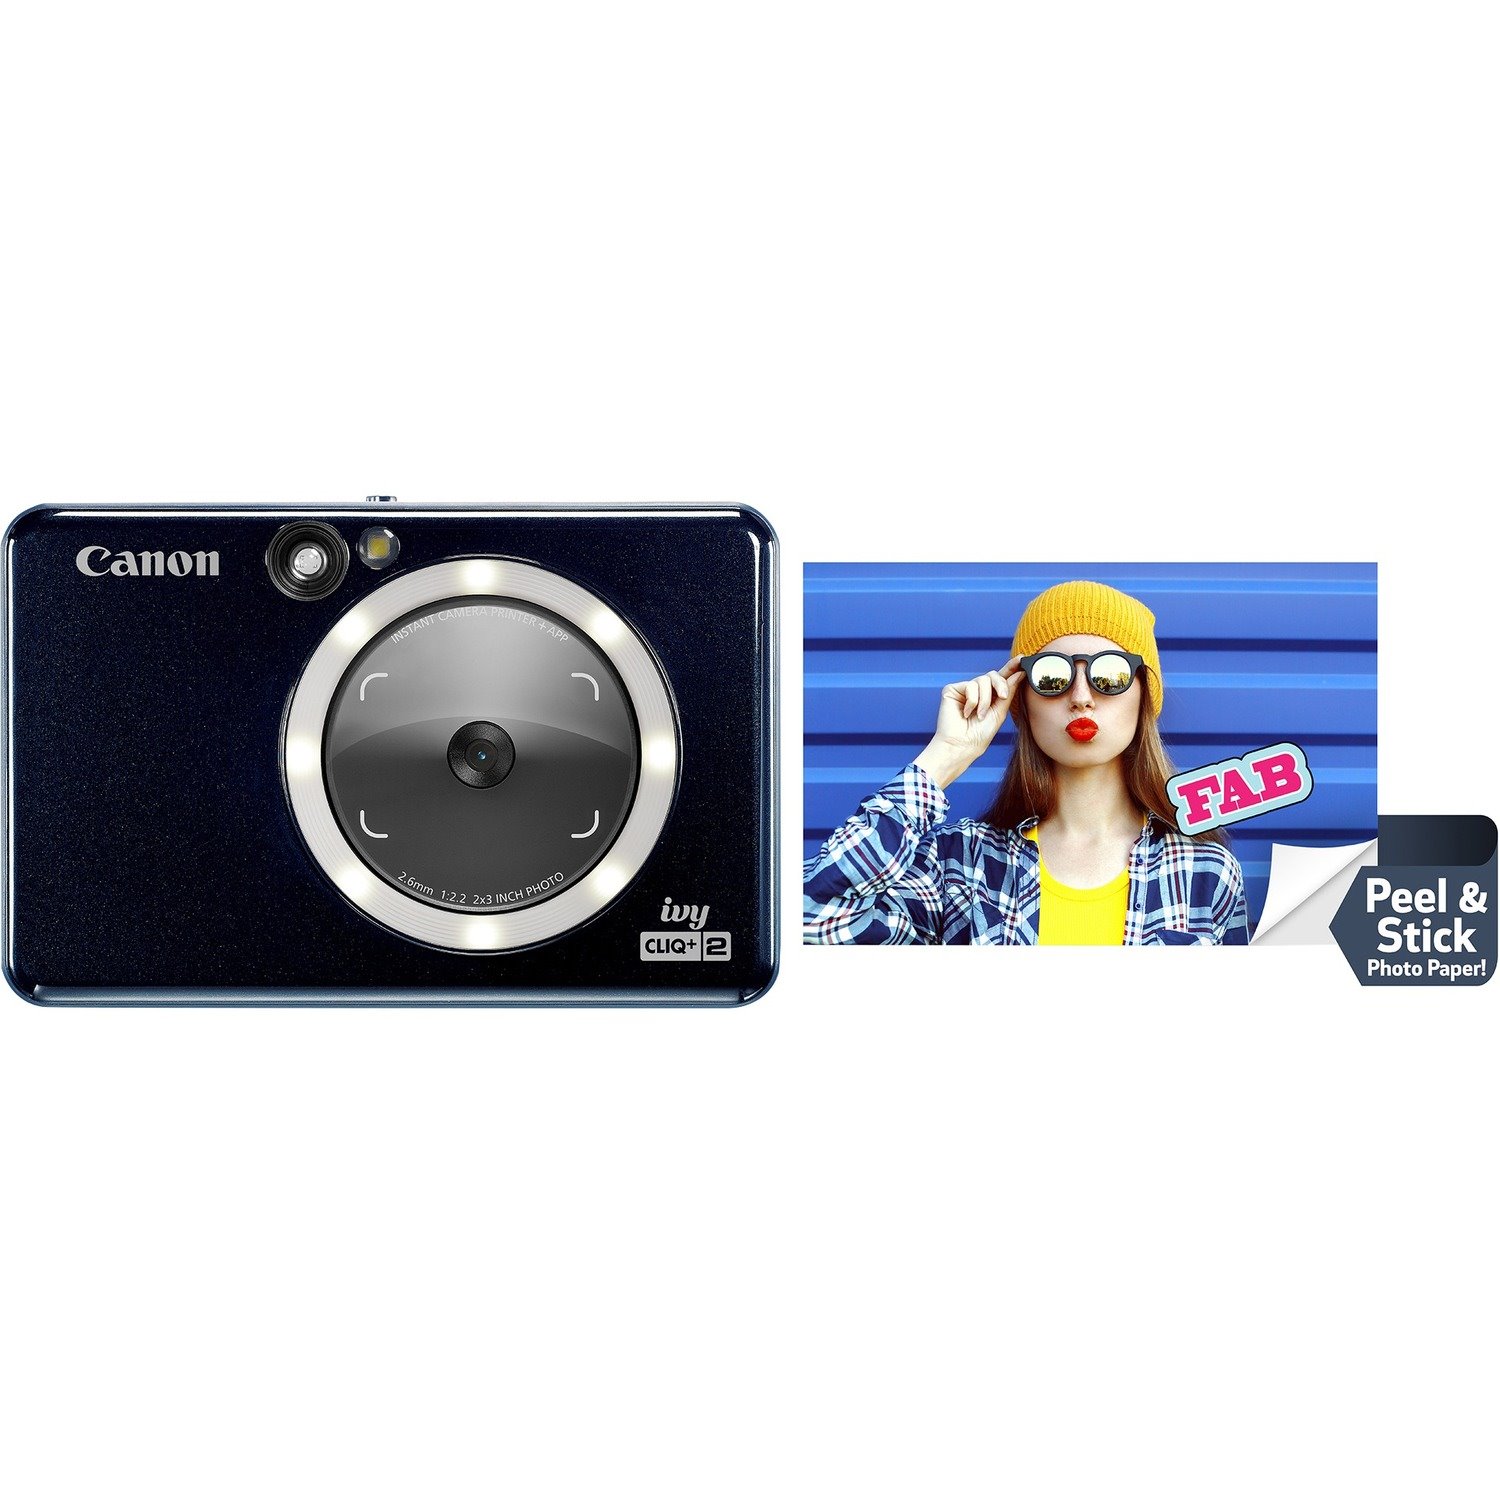 Canon IVY CLIQ+2 8 Megapixel Instant Digital Camera - Midnight Navy